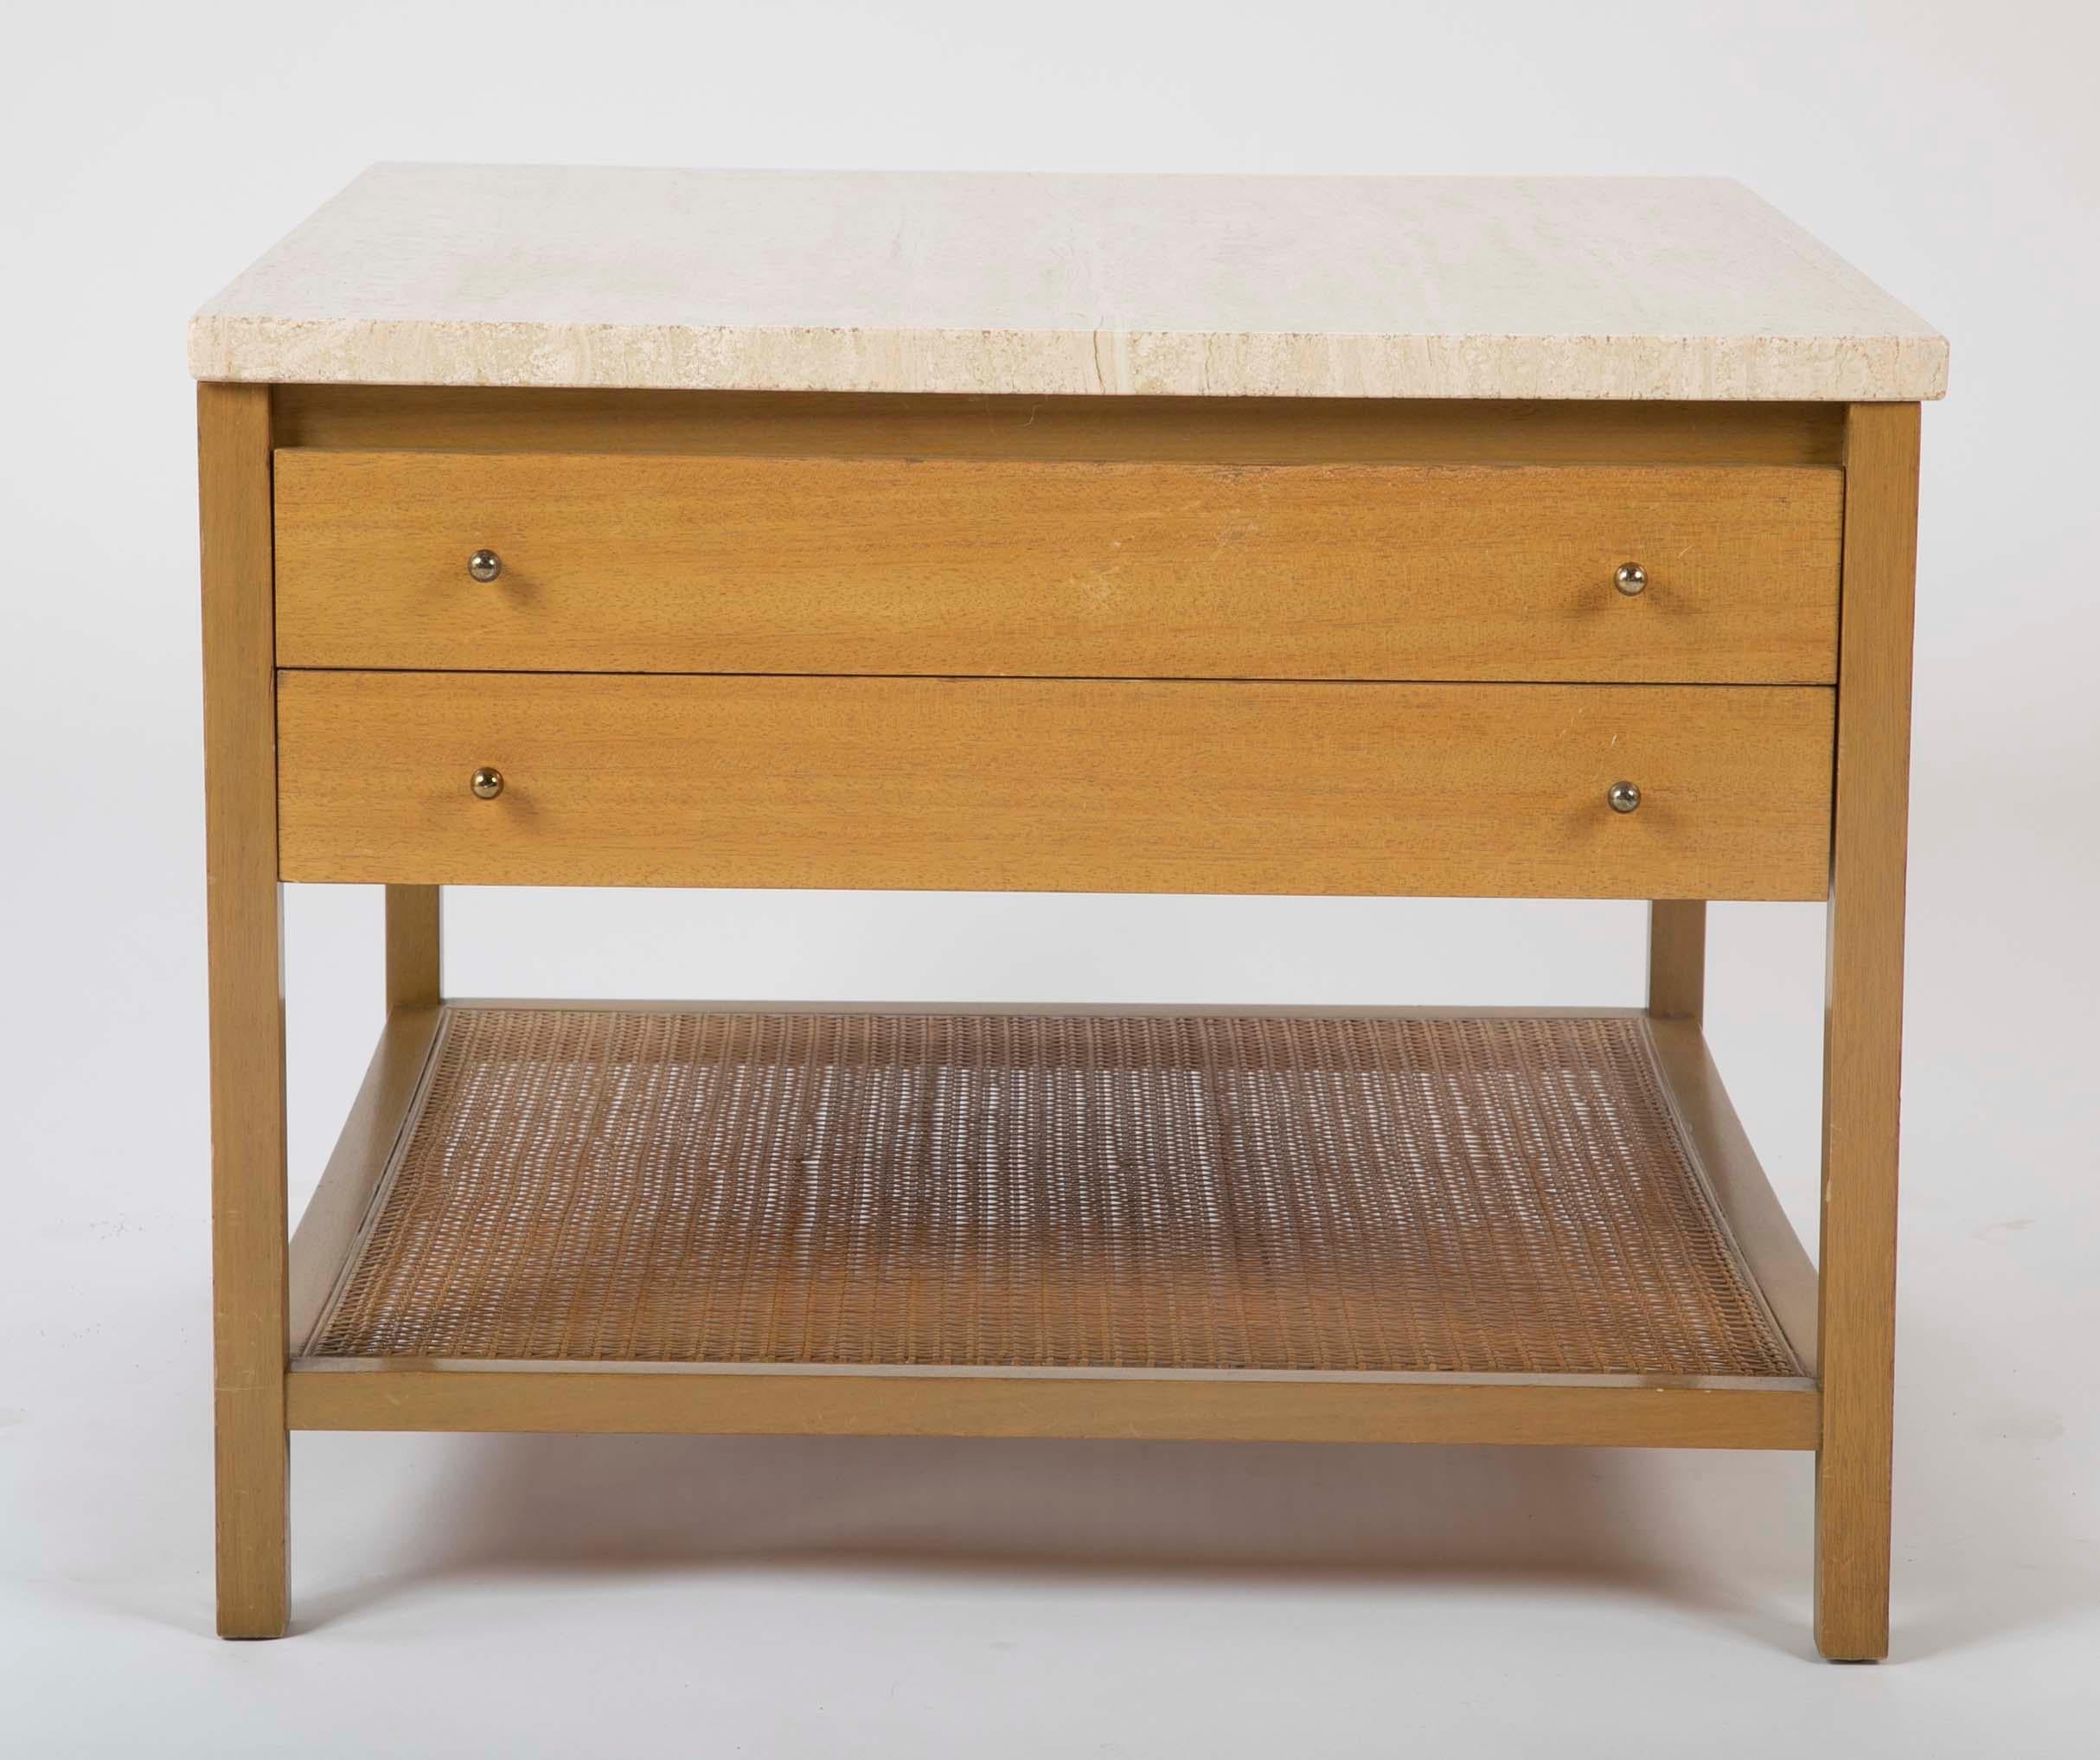 A Paul McCobb model #8731 Travertine top bleached Mahogany end table. Calvin furniture label inside door.